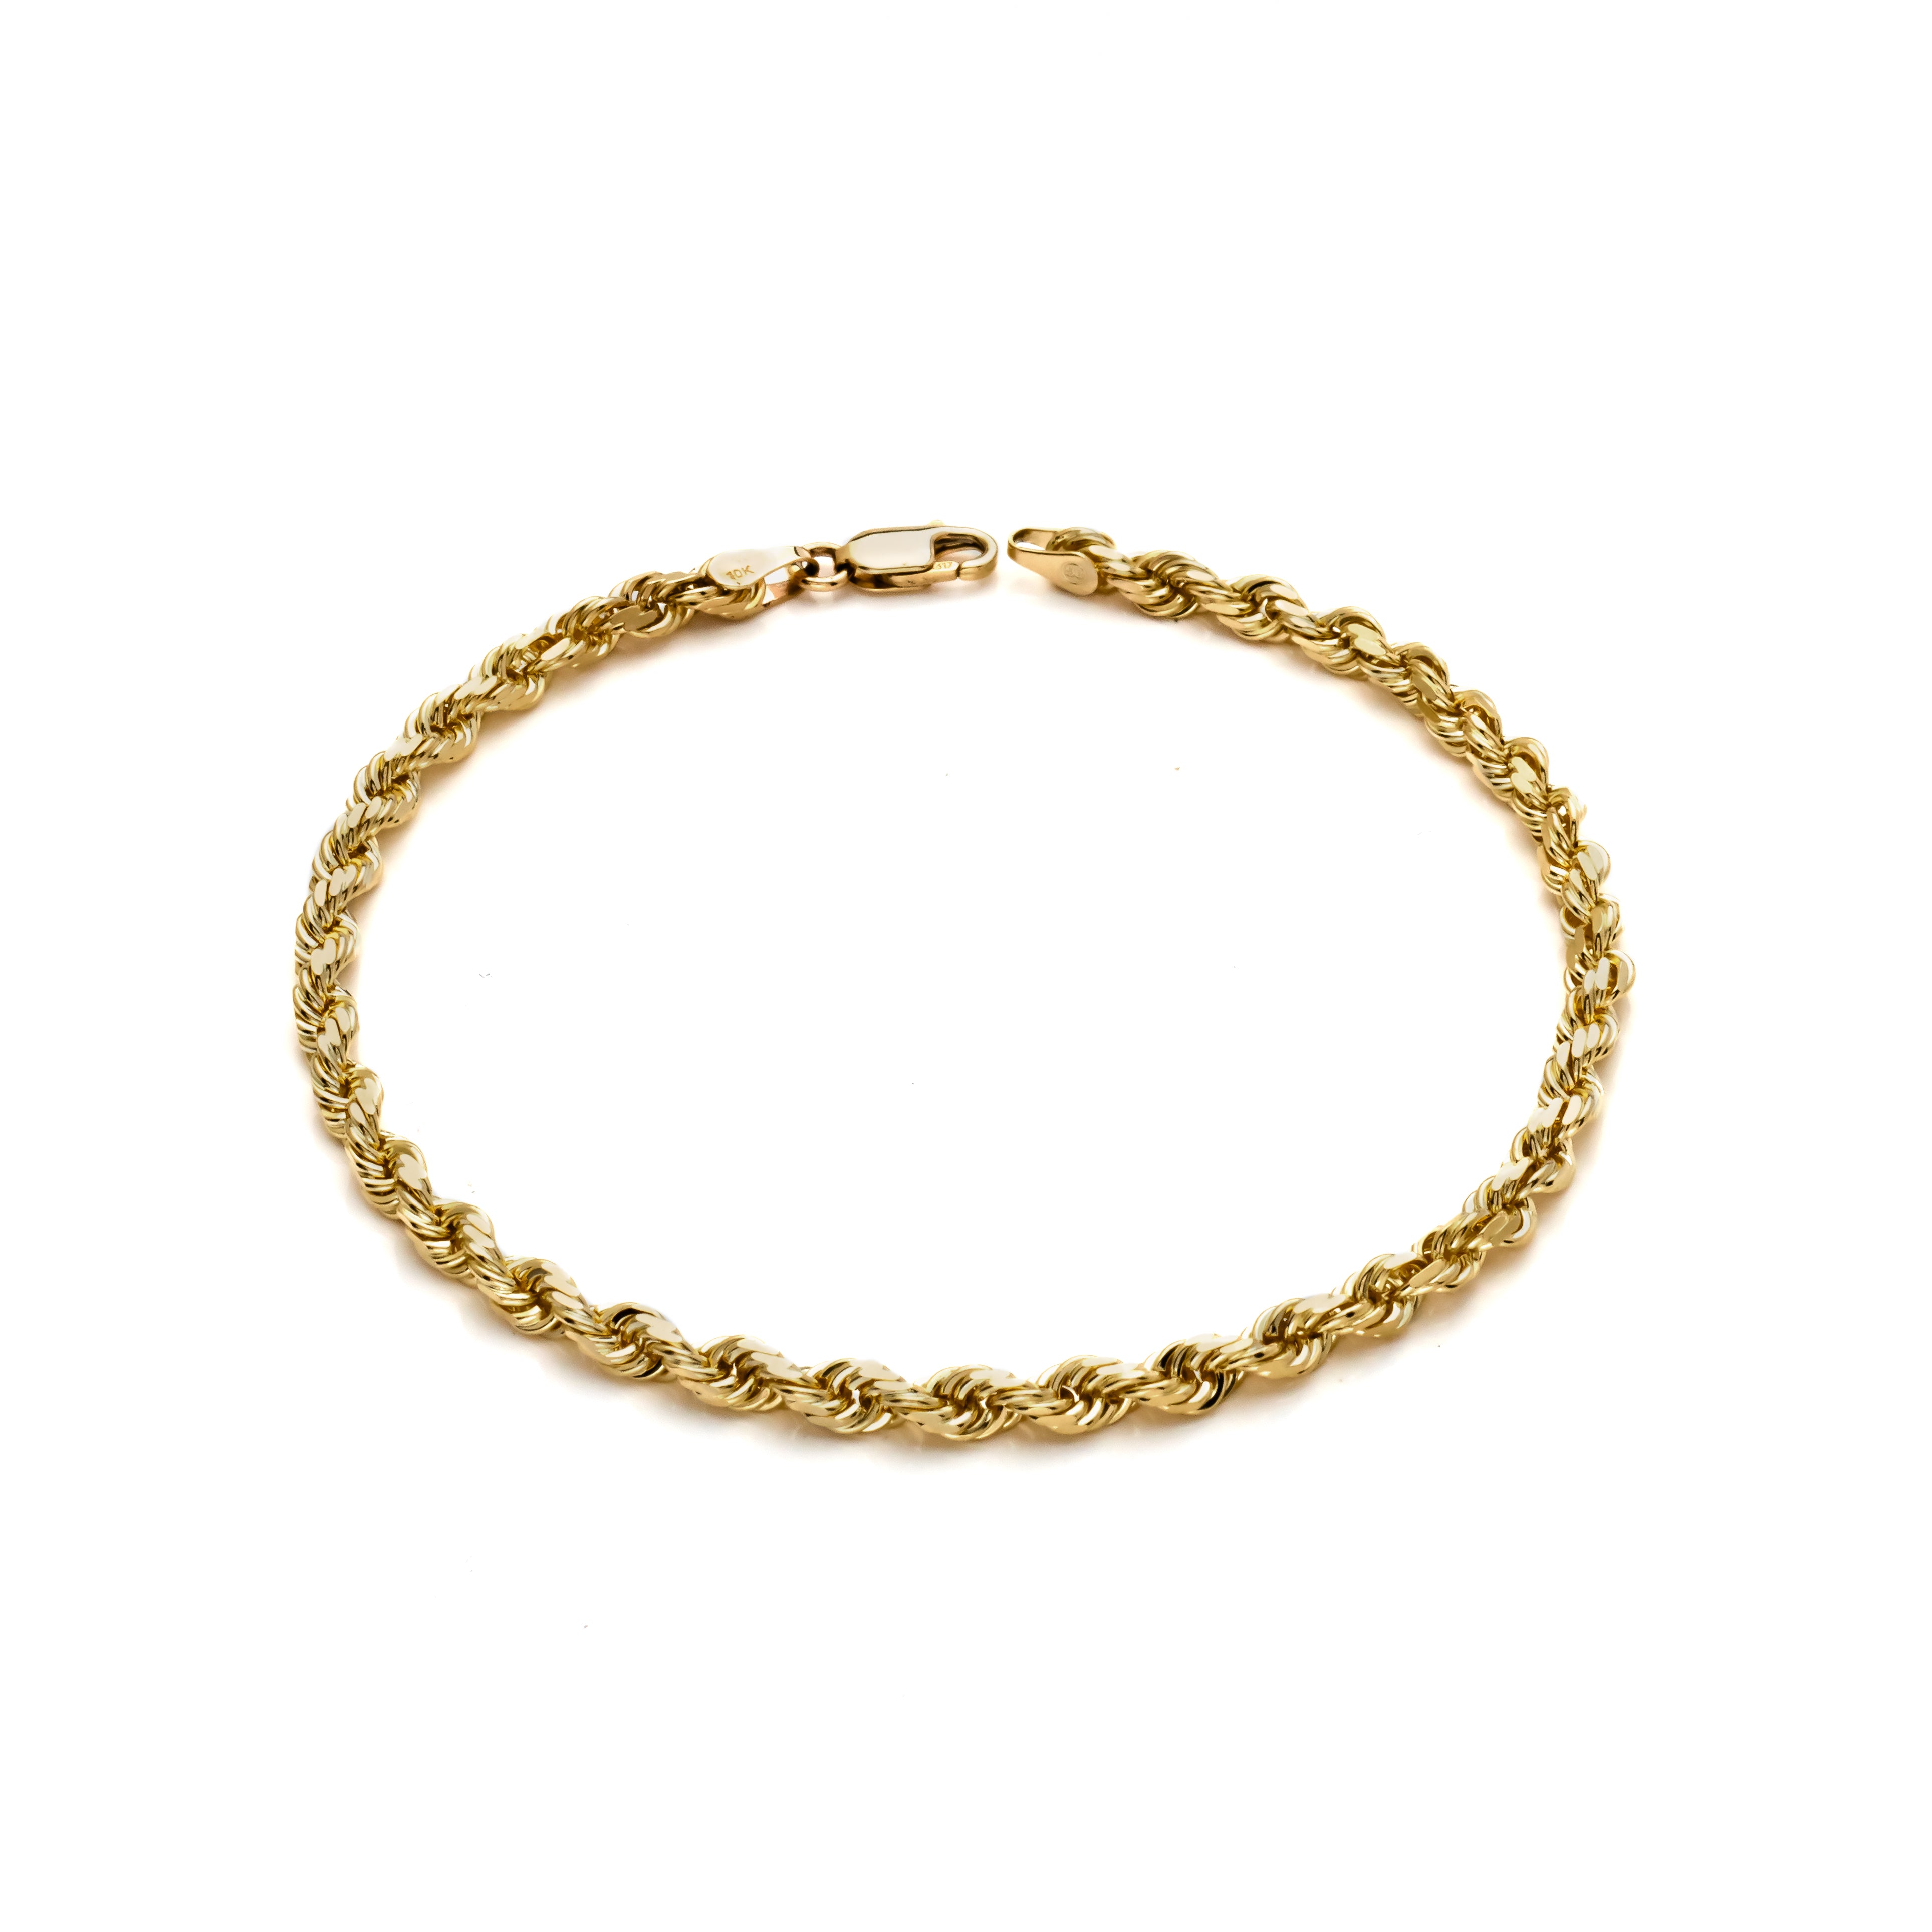 10k Yellow Gold Solid Diamond Cut Rope Bracelet